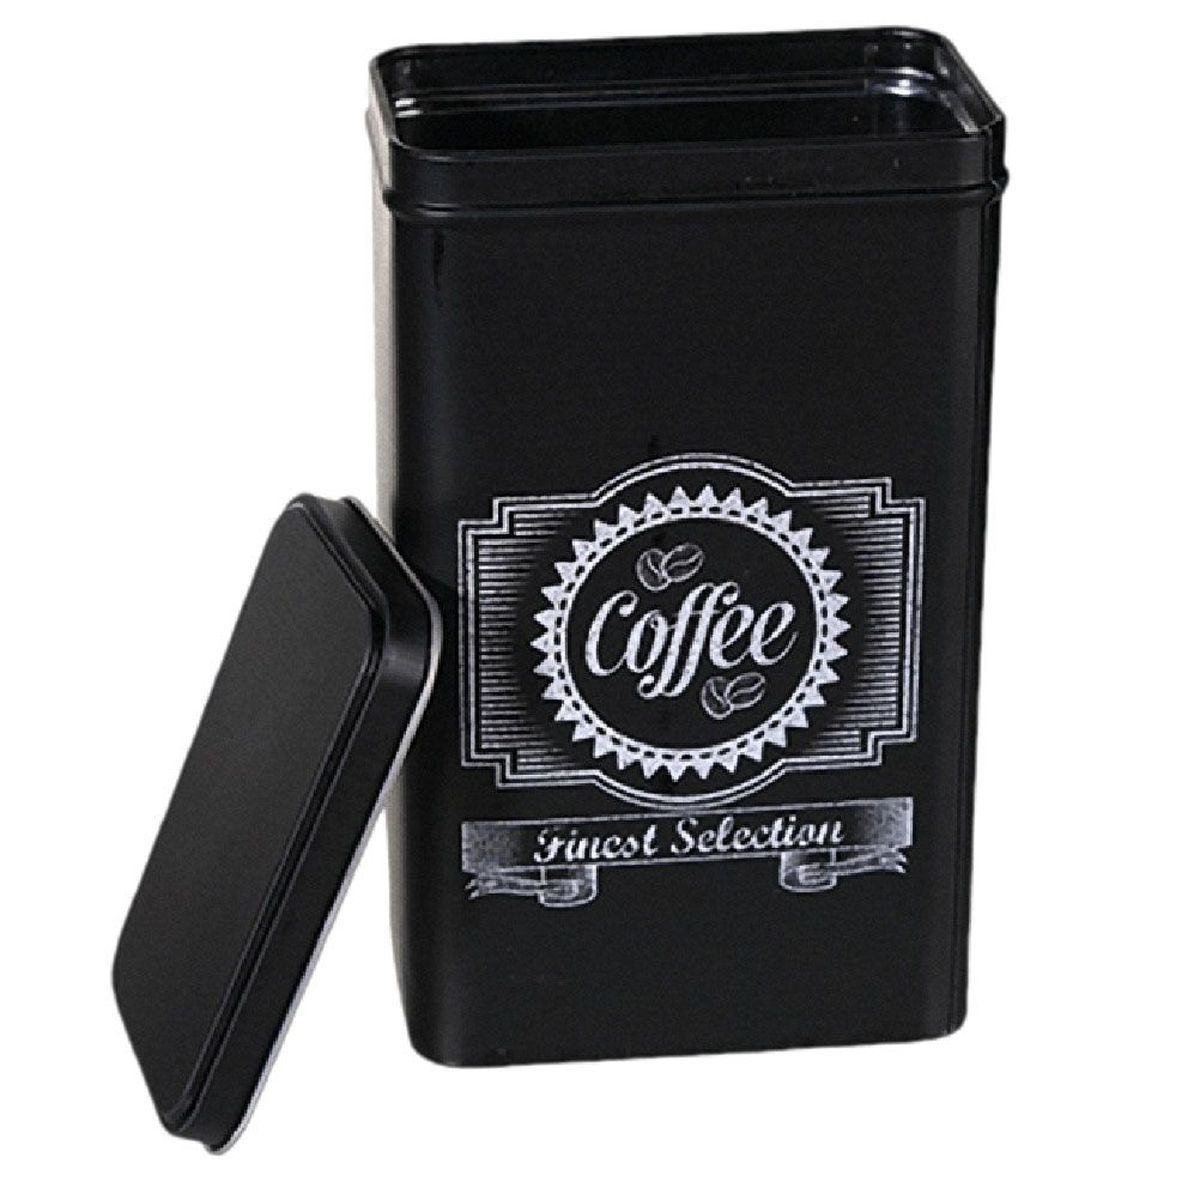 Retro Coffee box matte black metal